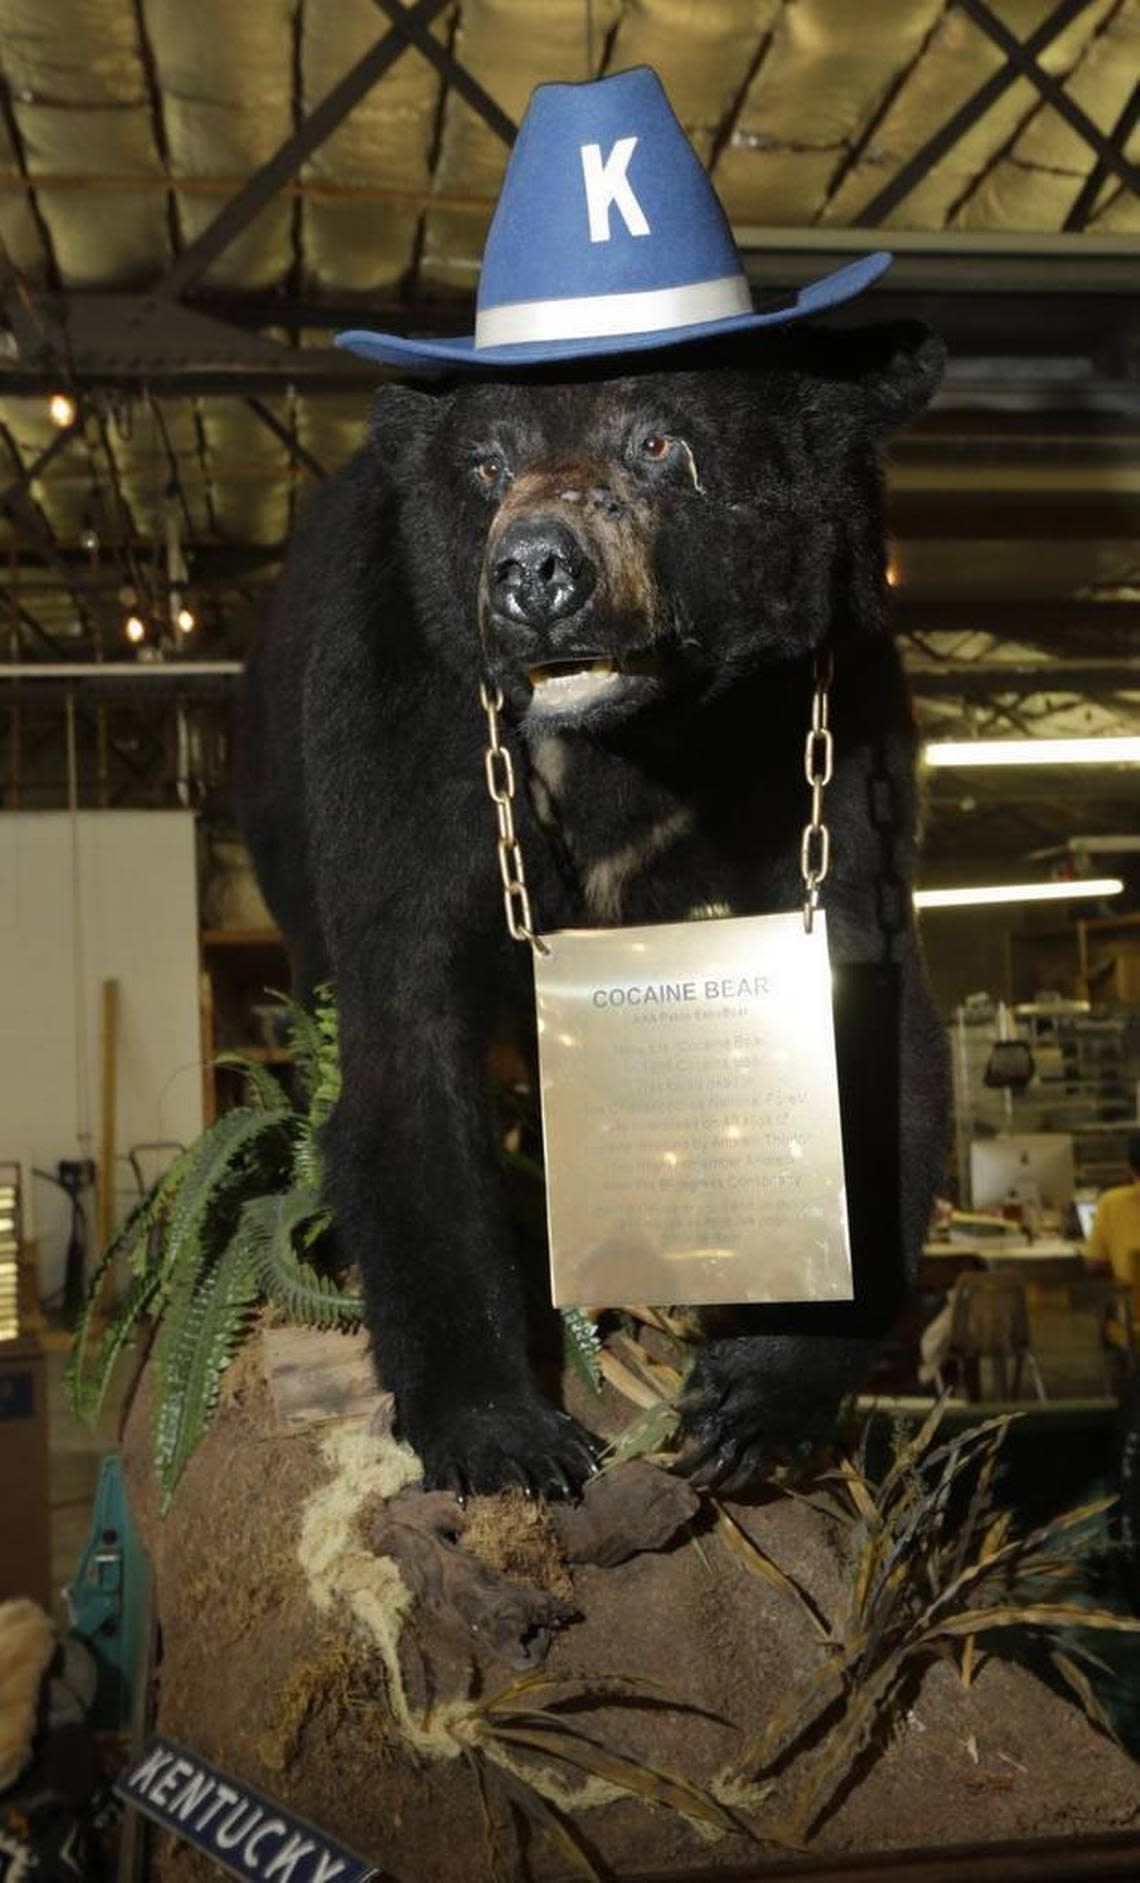 Cocaine Bear on display at the Kentucky Fun Mall on Bryan Avenue in Lexington.